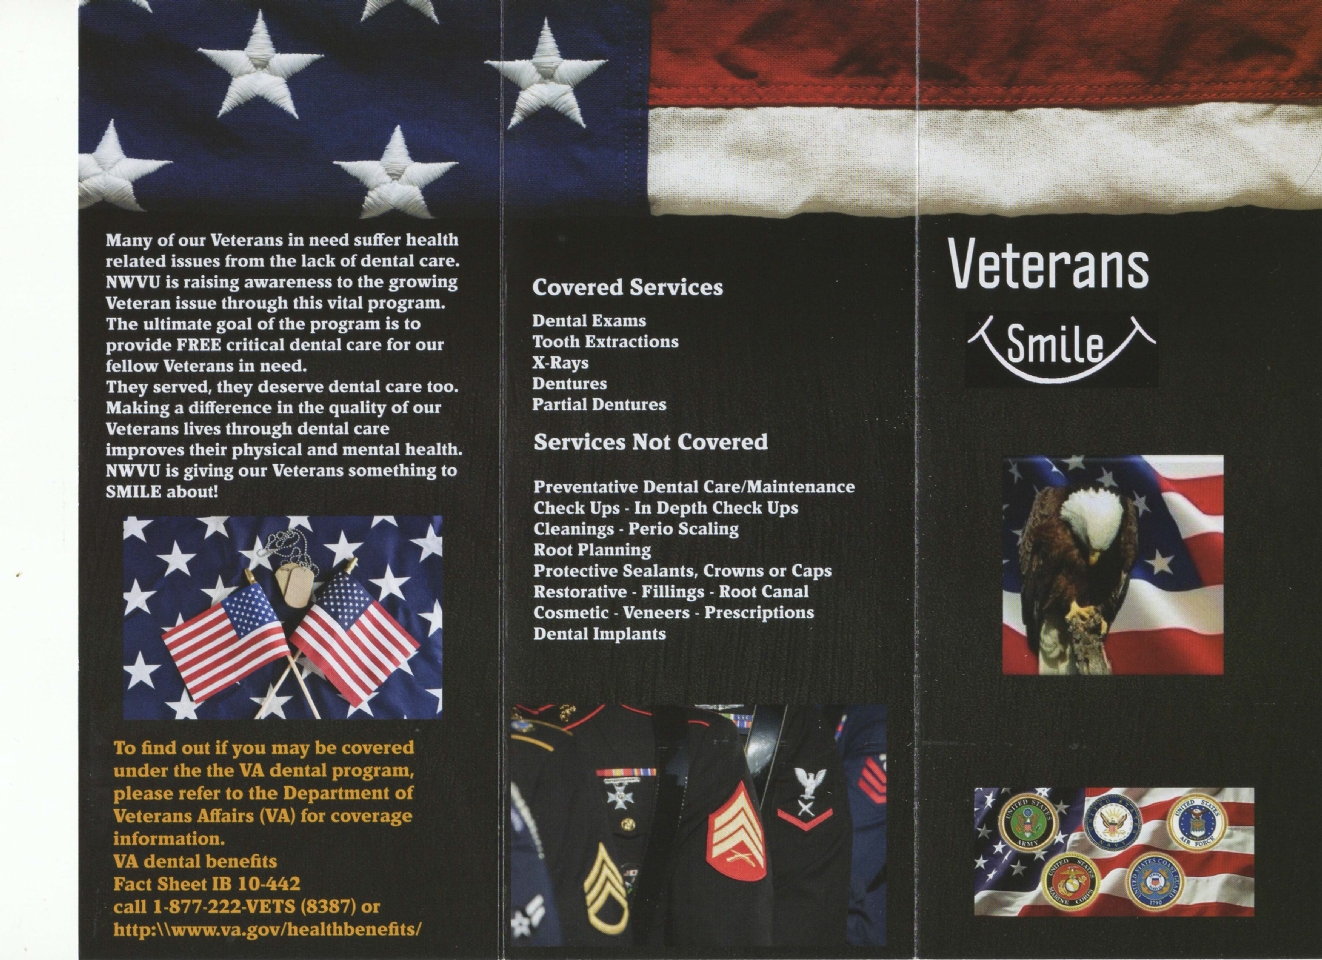 Inside of the Veteran's Smile Brochure